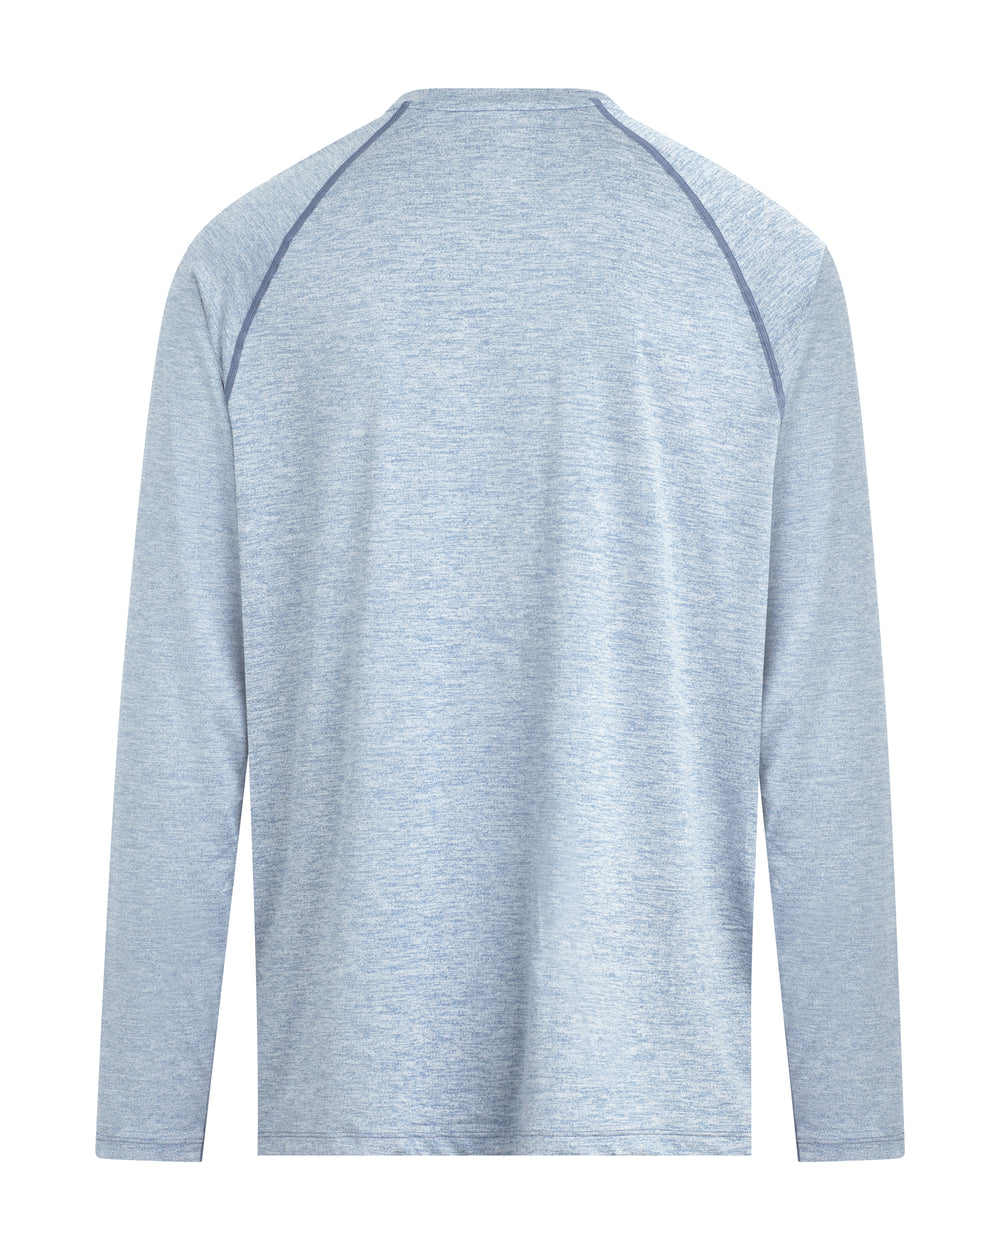 Long-Sleeved Raglan UPF 50+ Blue Body | T-Shirt Glove